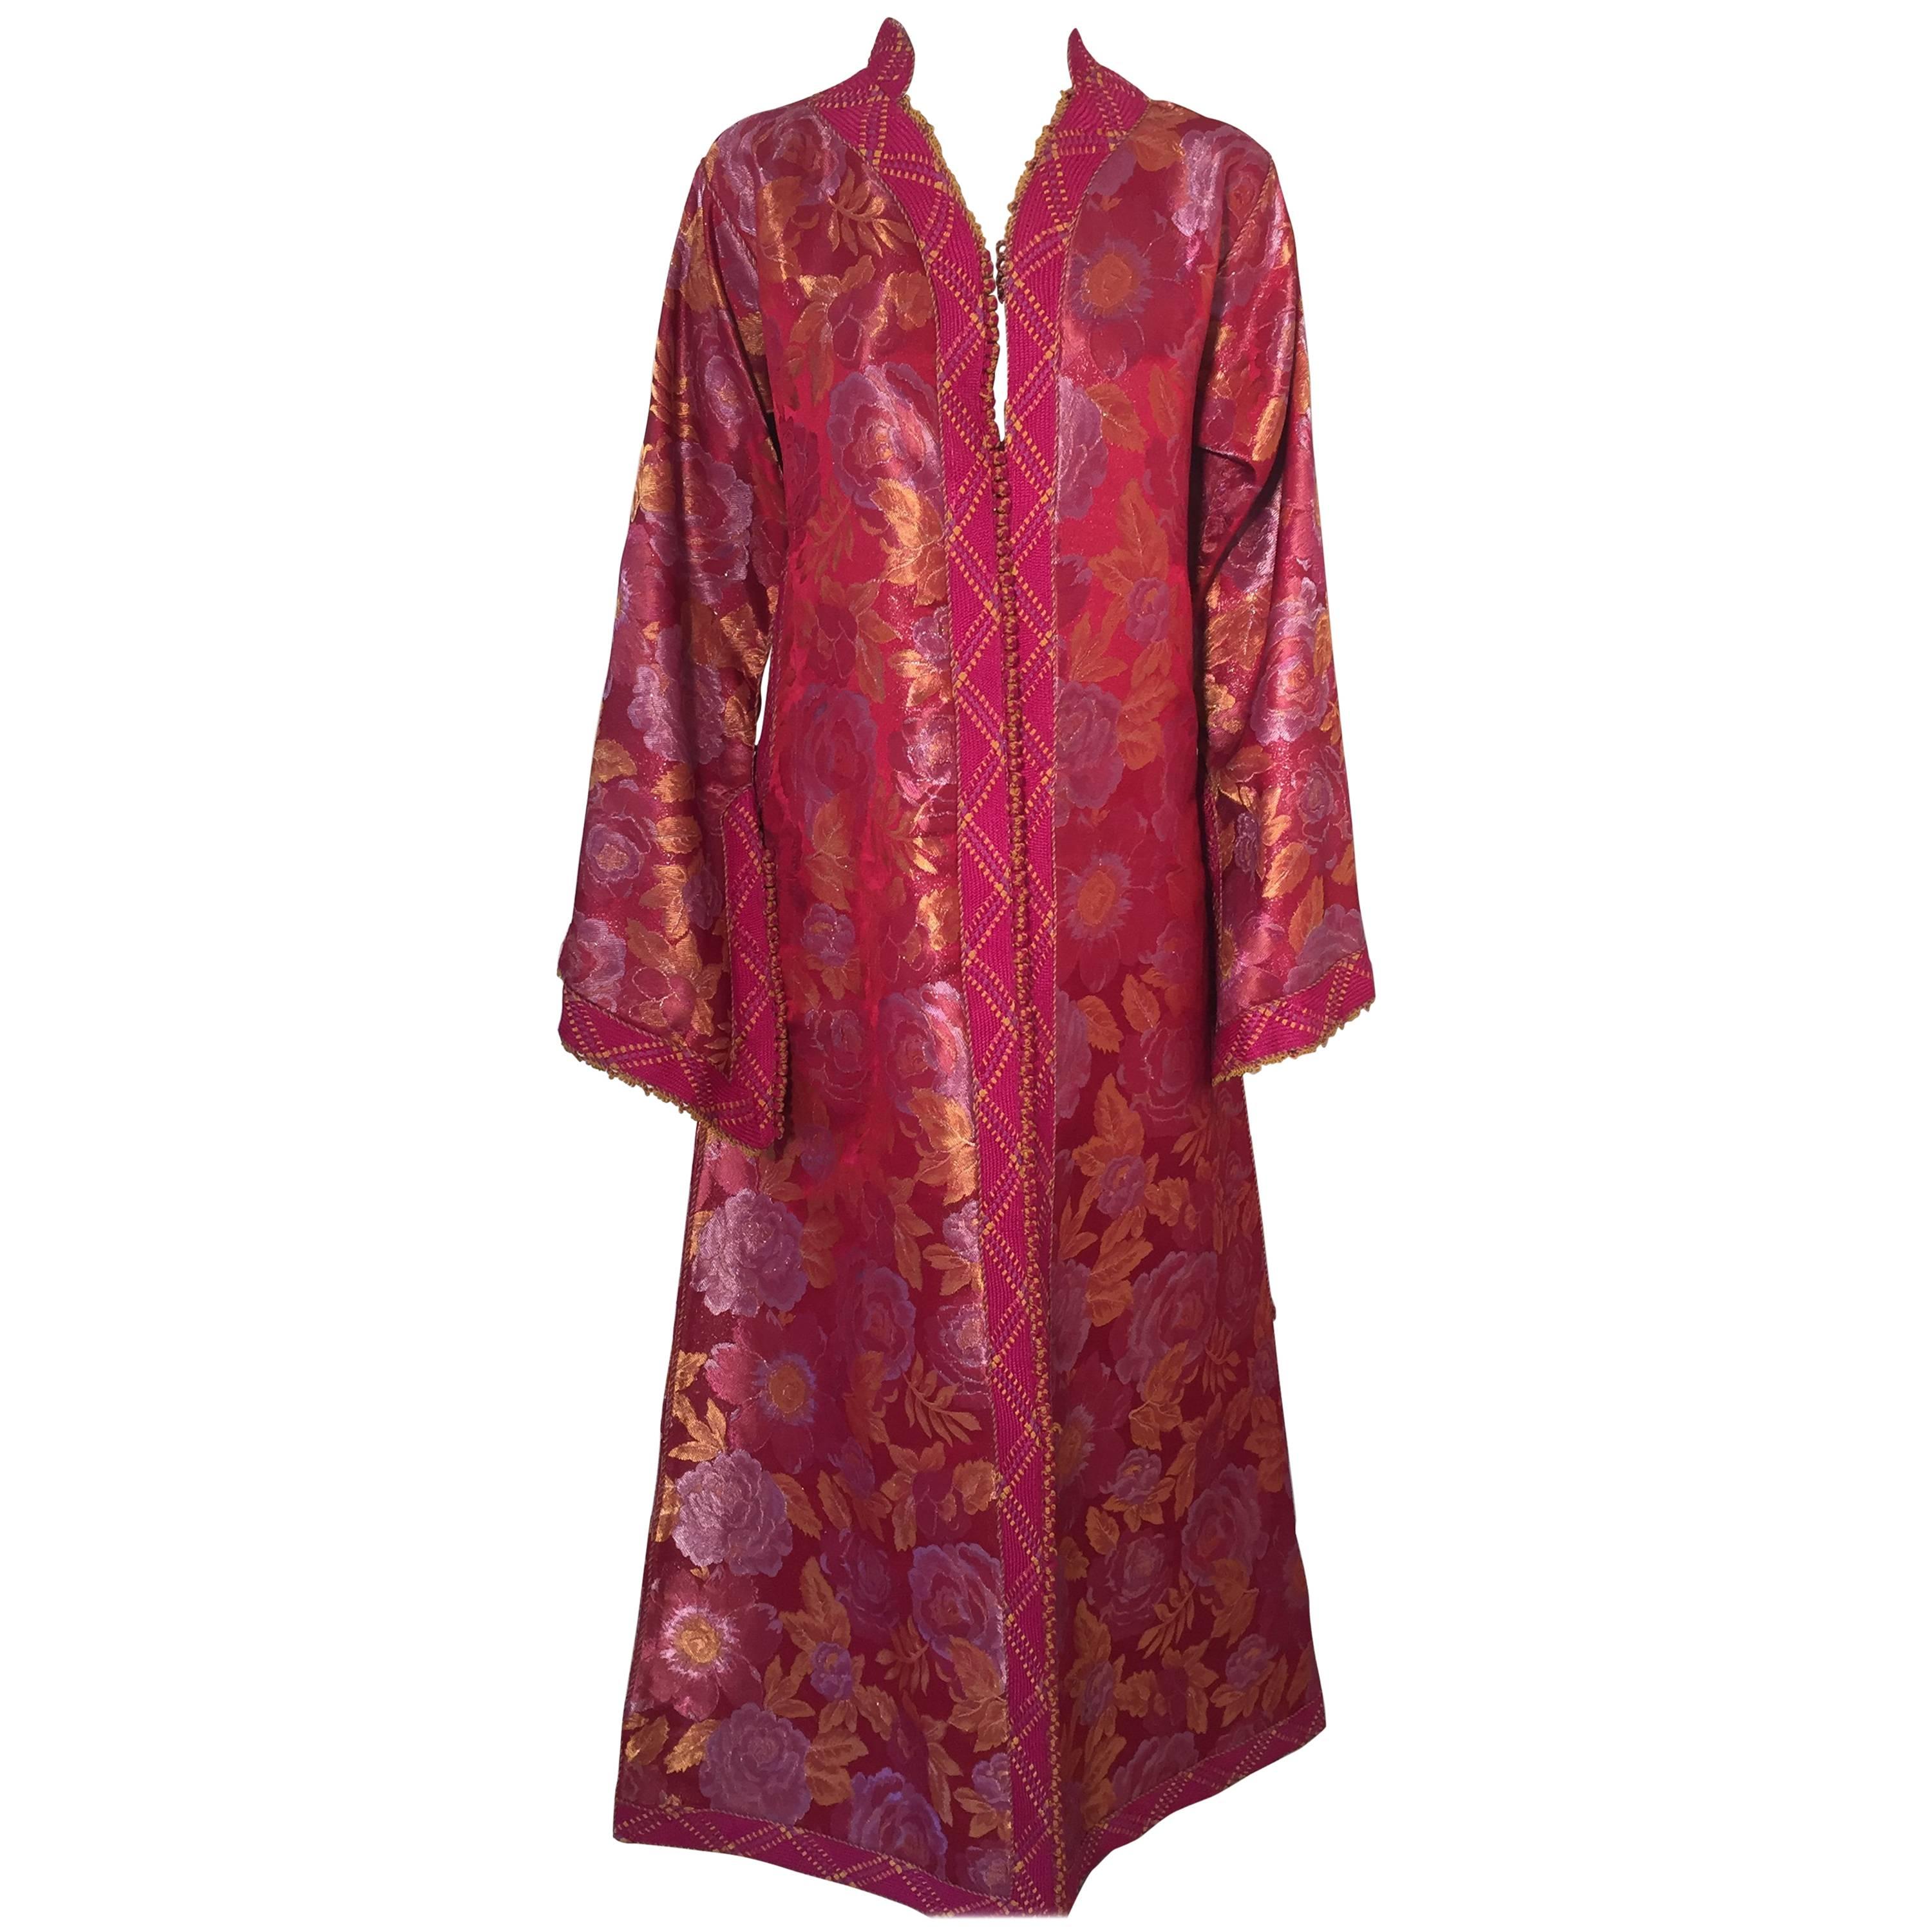 Moroccan Red Lame Caftan Maxi Dress Kaftan Size L